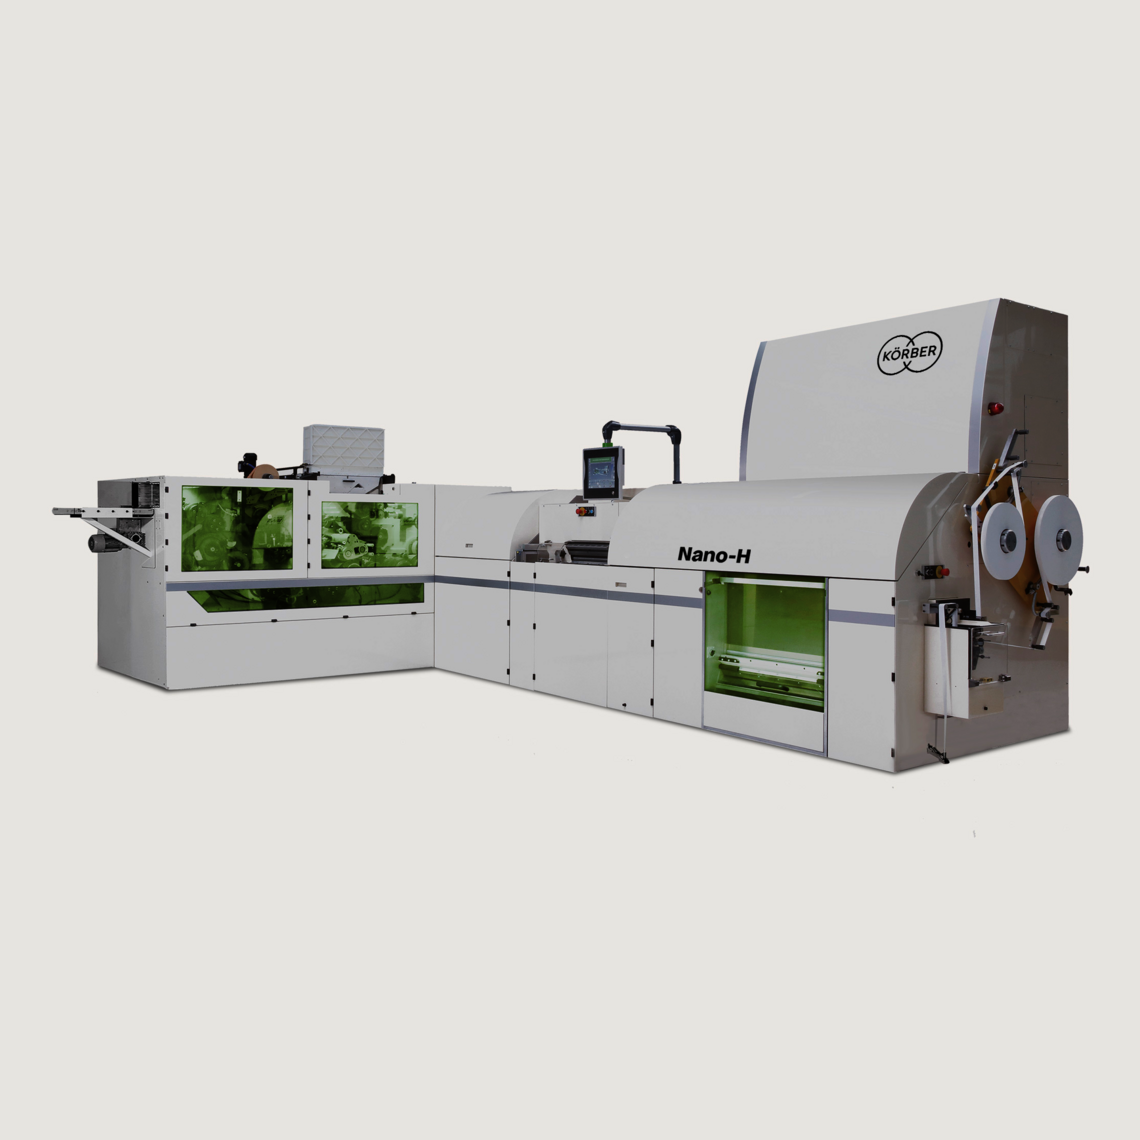 Körber's Nano-H, a high-level cannabis manufacturing machine with a capacity of 5000 pre-rolls per minute.